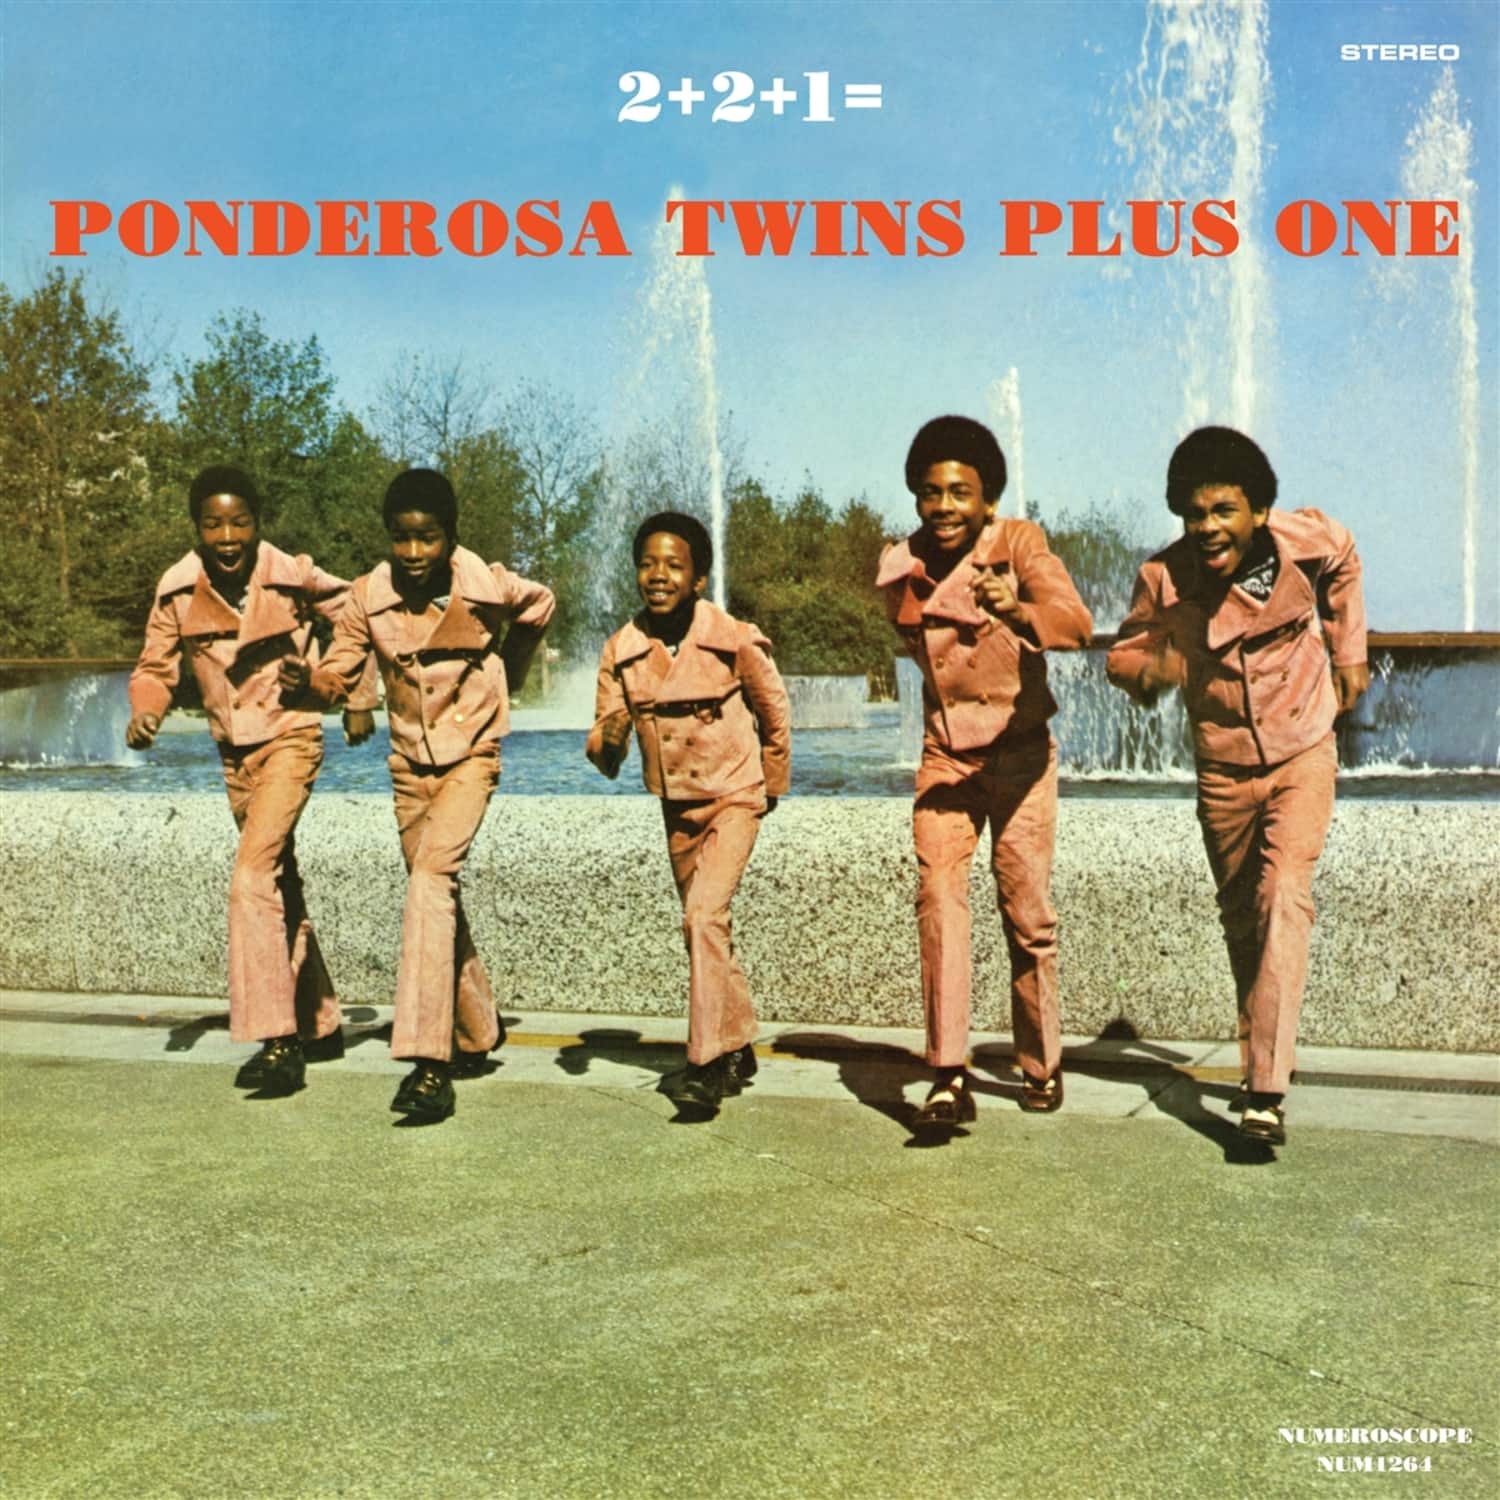 The Ponderosa Twins Plus One - 2+2+1 